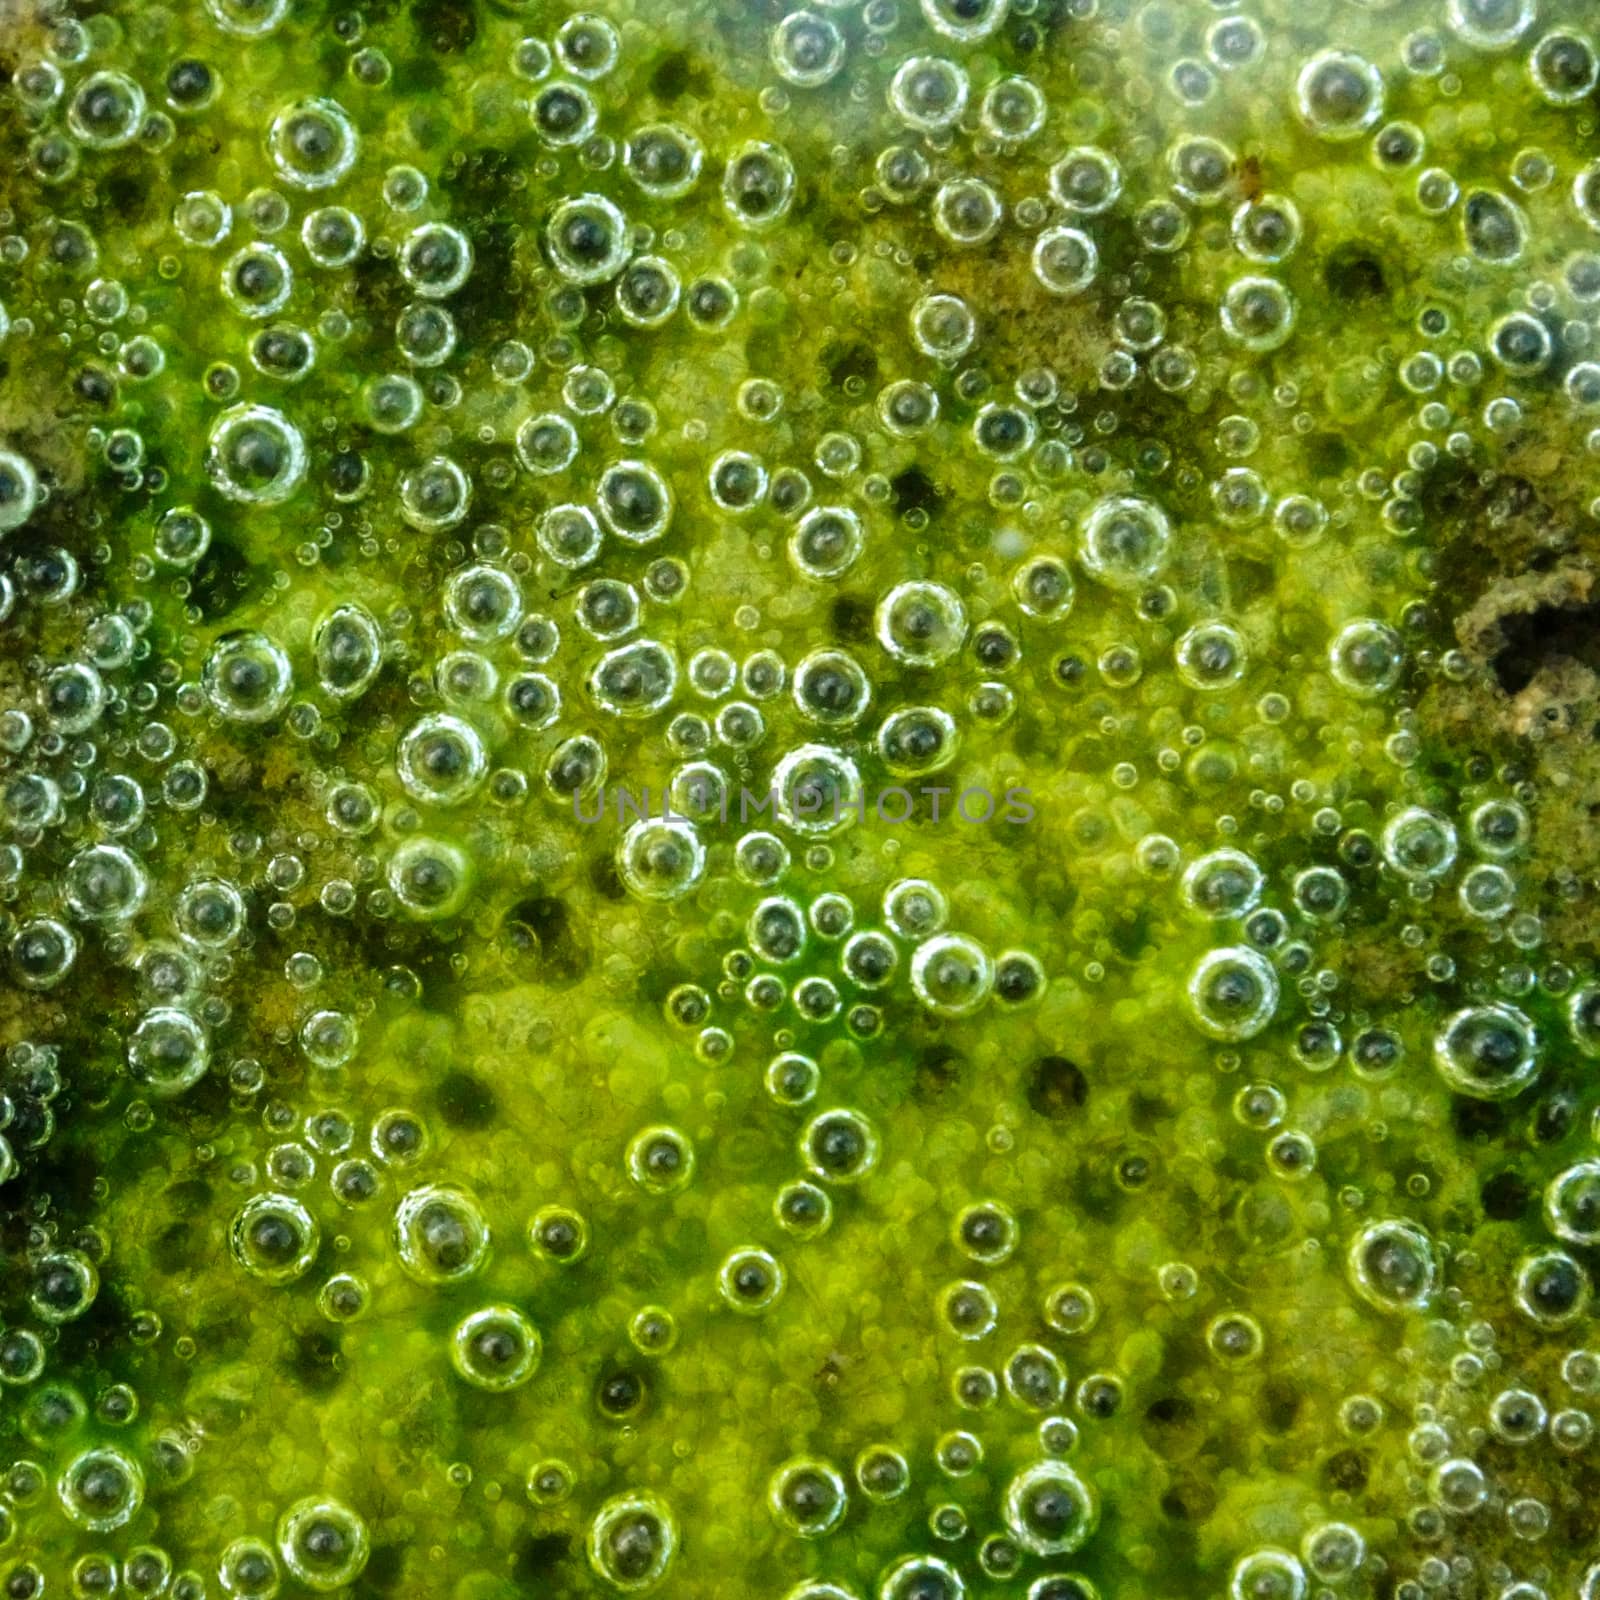 Green slime from algae. by Noppharat_th